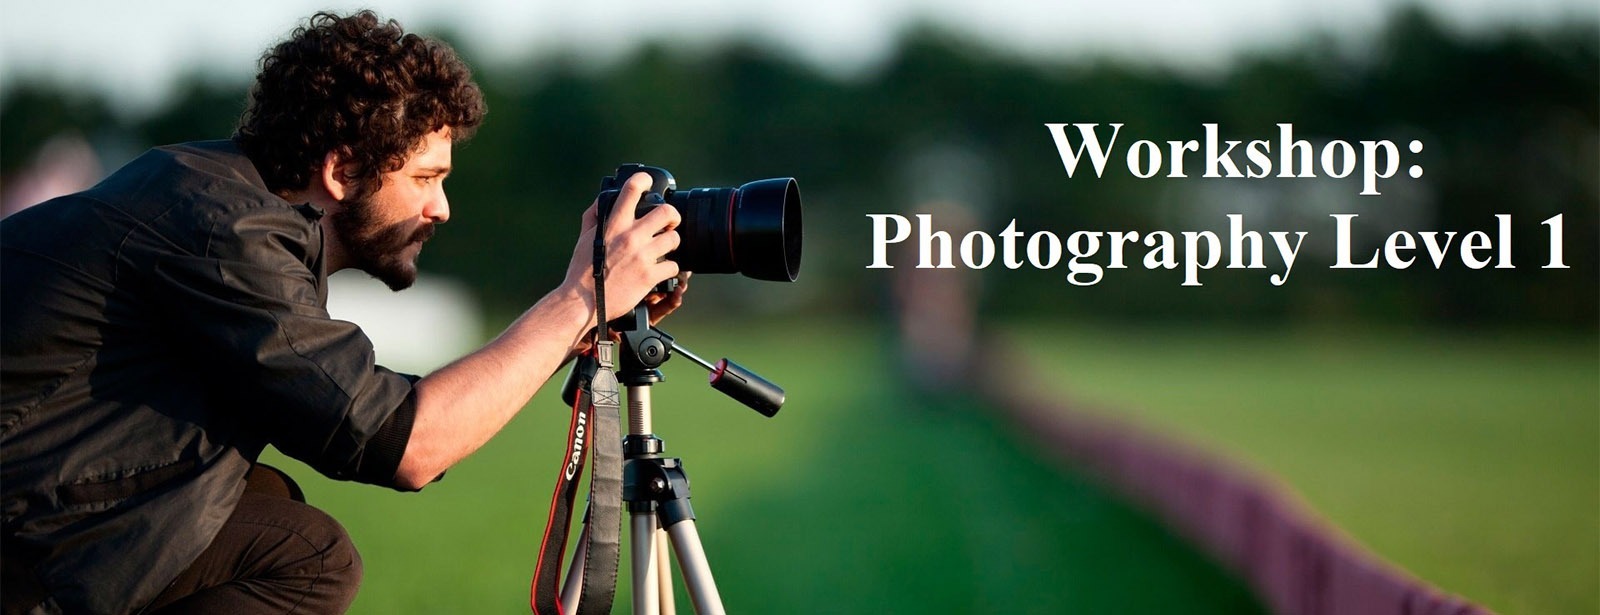 GPP: Workshop Photography Level 1 - Coming Soon in UAE